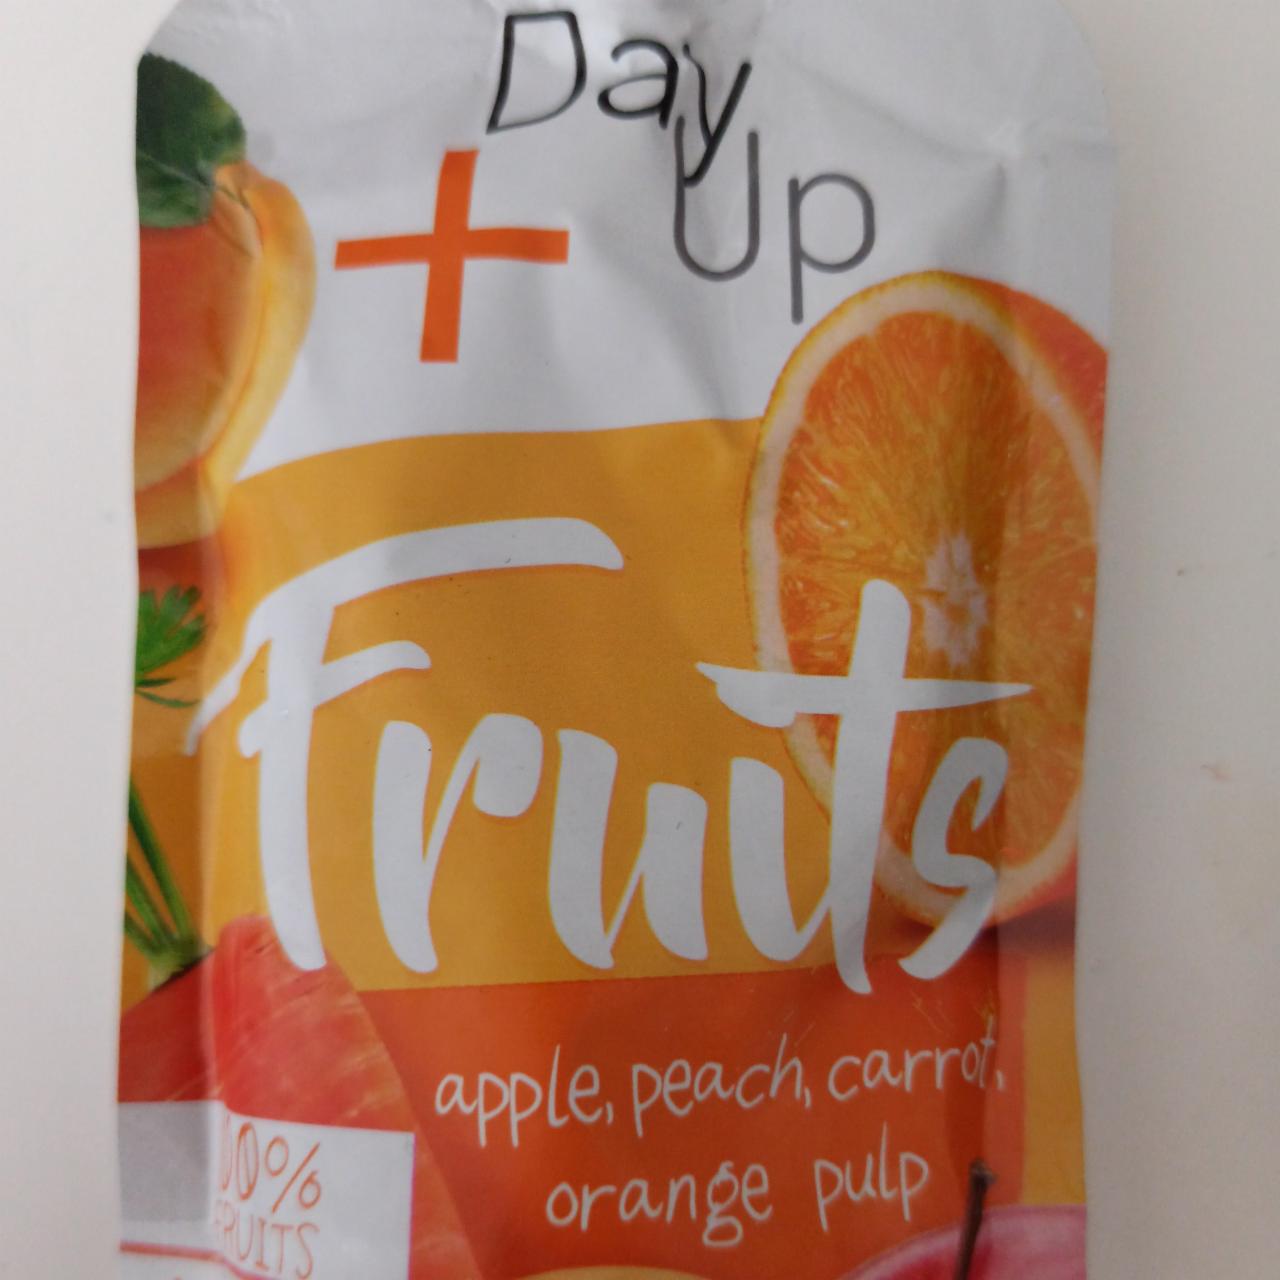 Fotografie - Day Up + Fruits apple, peach, carrot, orange pulp